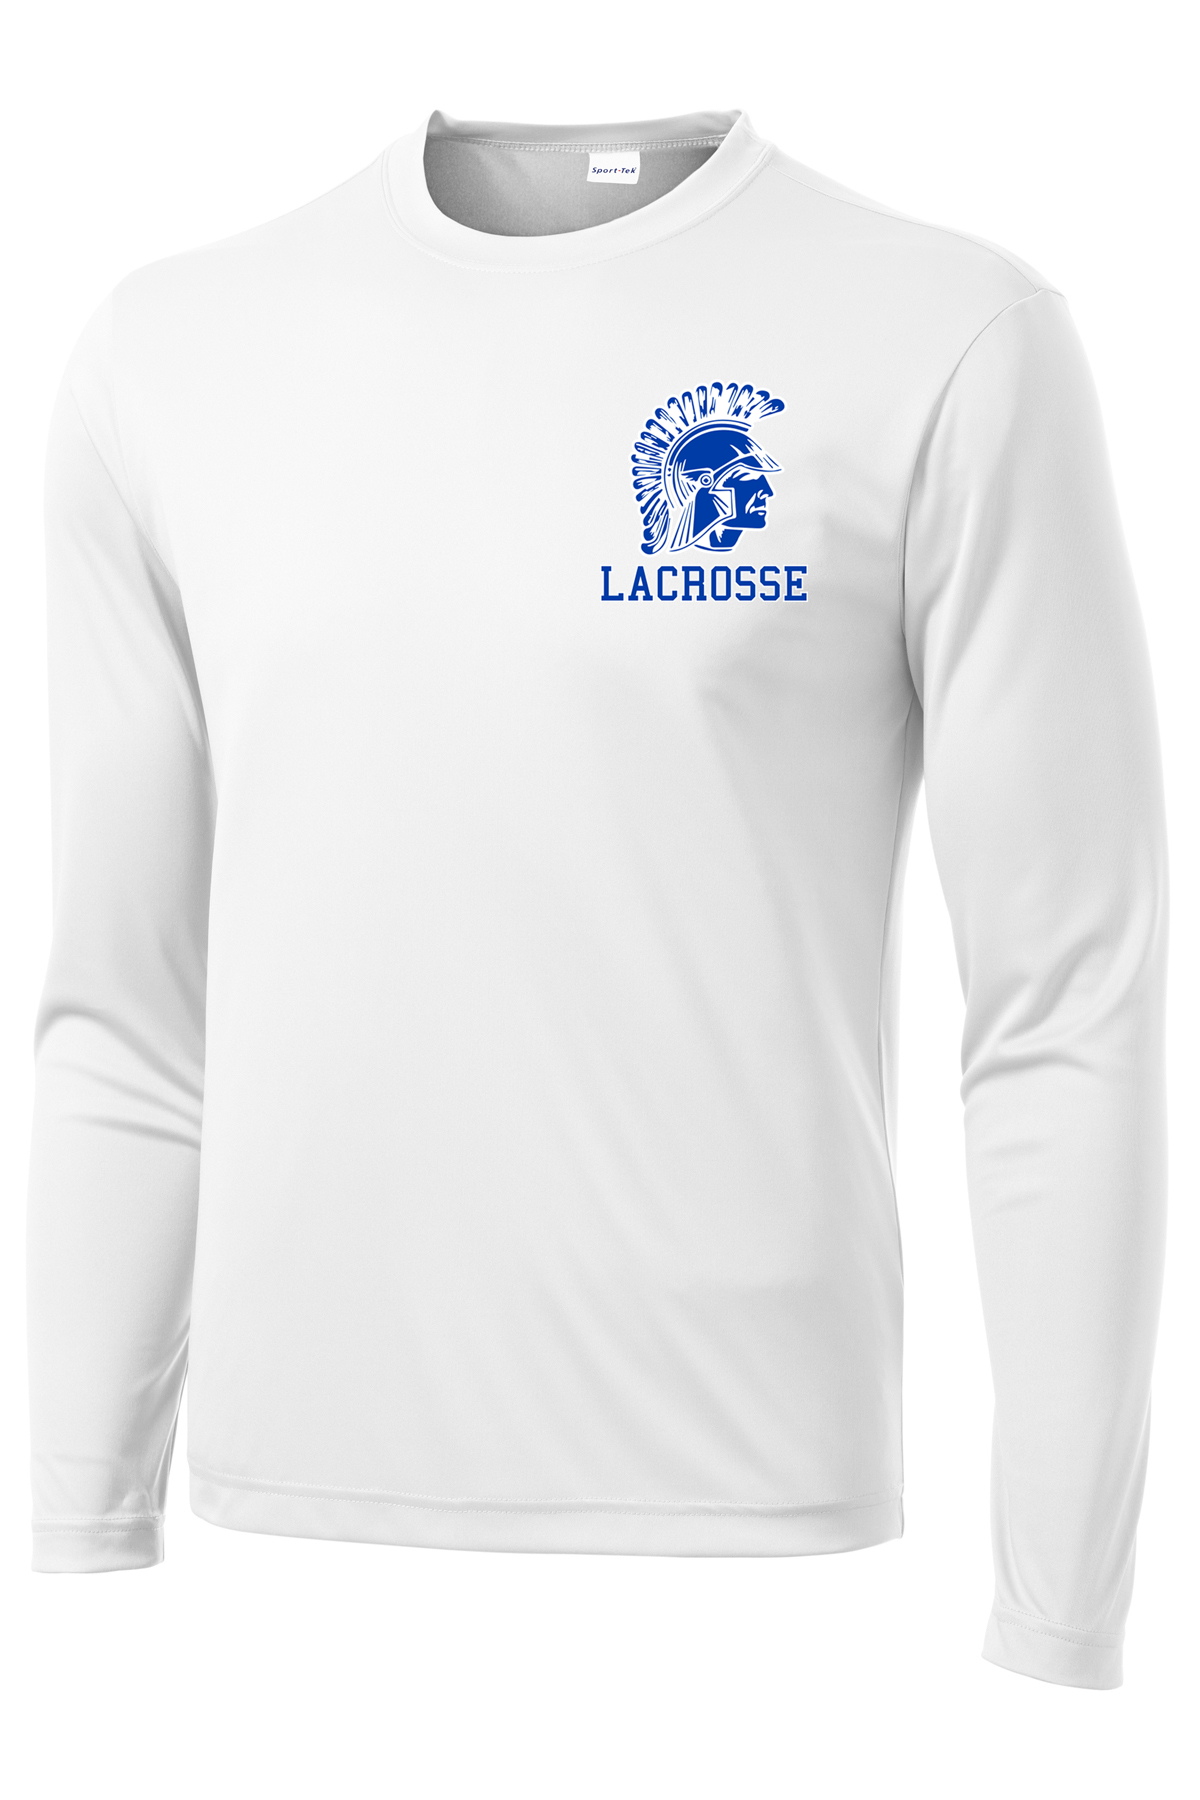 Chambersburg Lacrosse Men's White Long Sleeve Performance Shirt